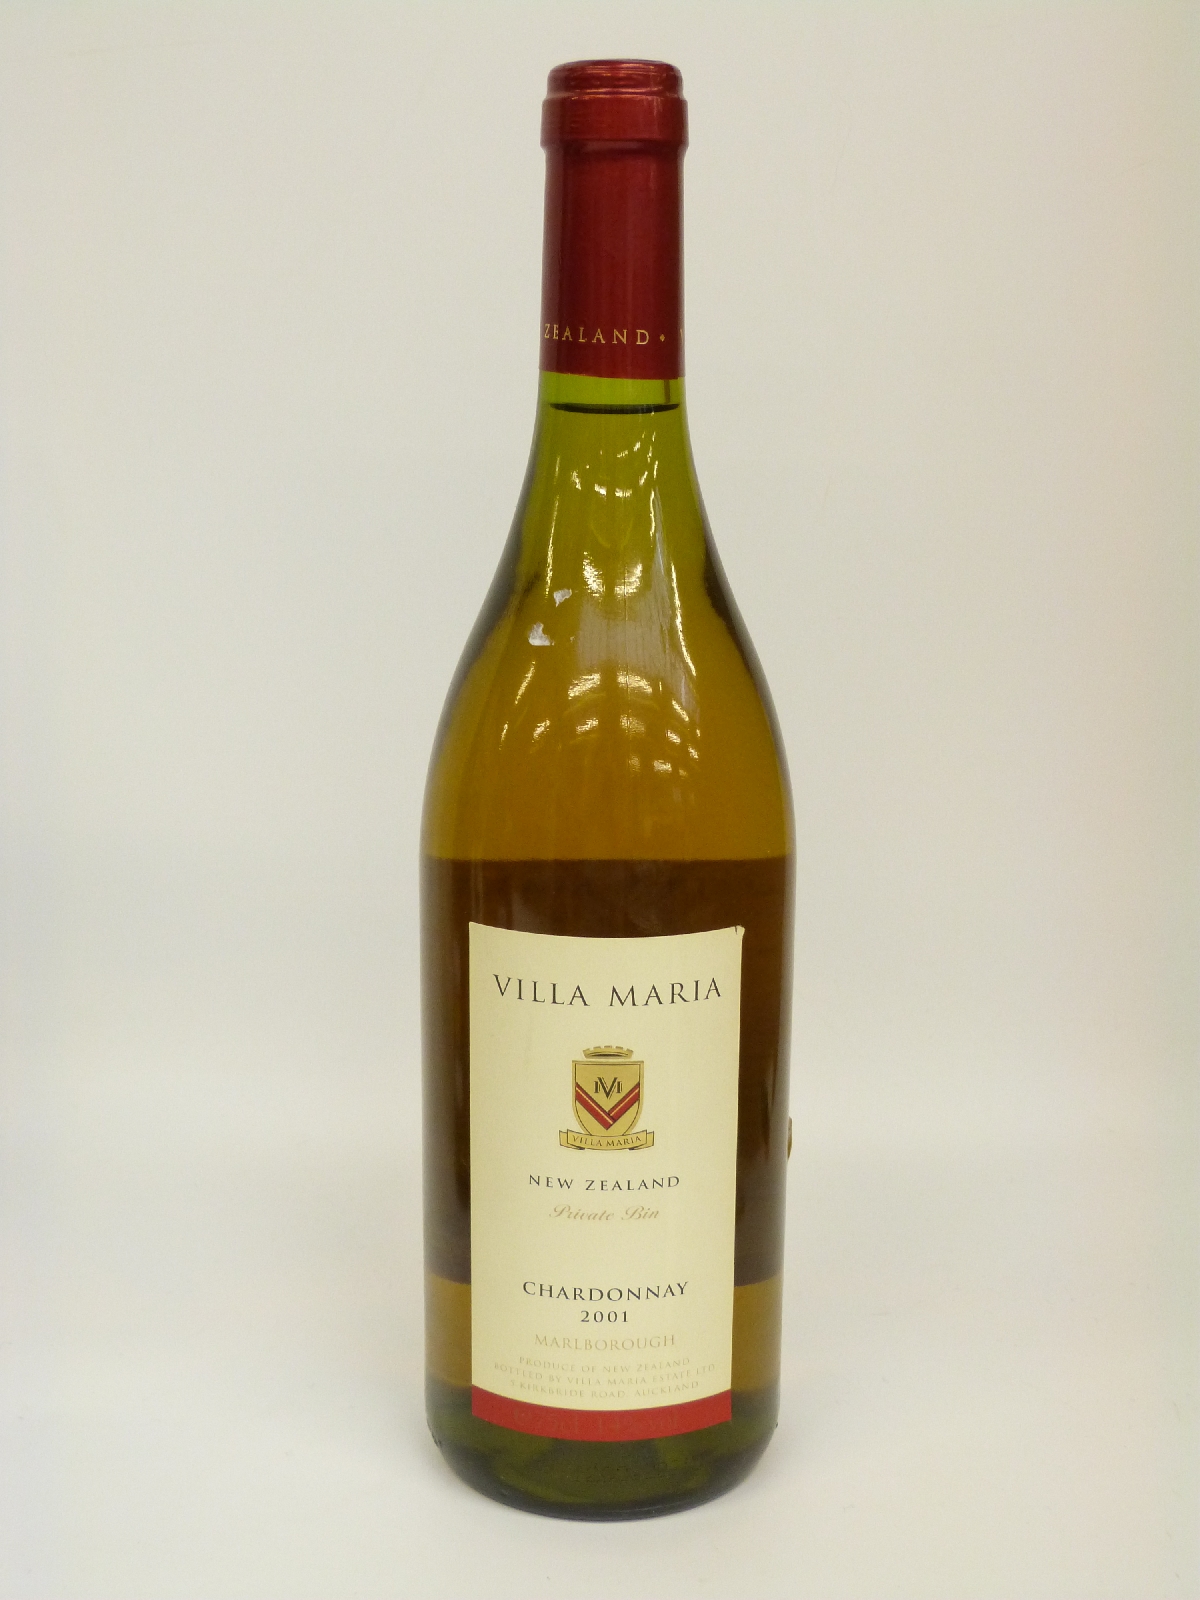 Seven bottles of wine and sherry including Penfolds Koonunga Hill 1997 Chardonnay, - Image 3 of 9